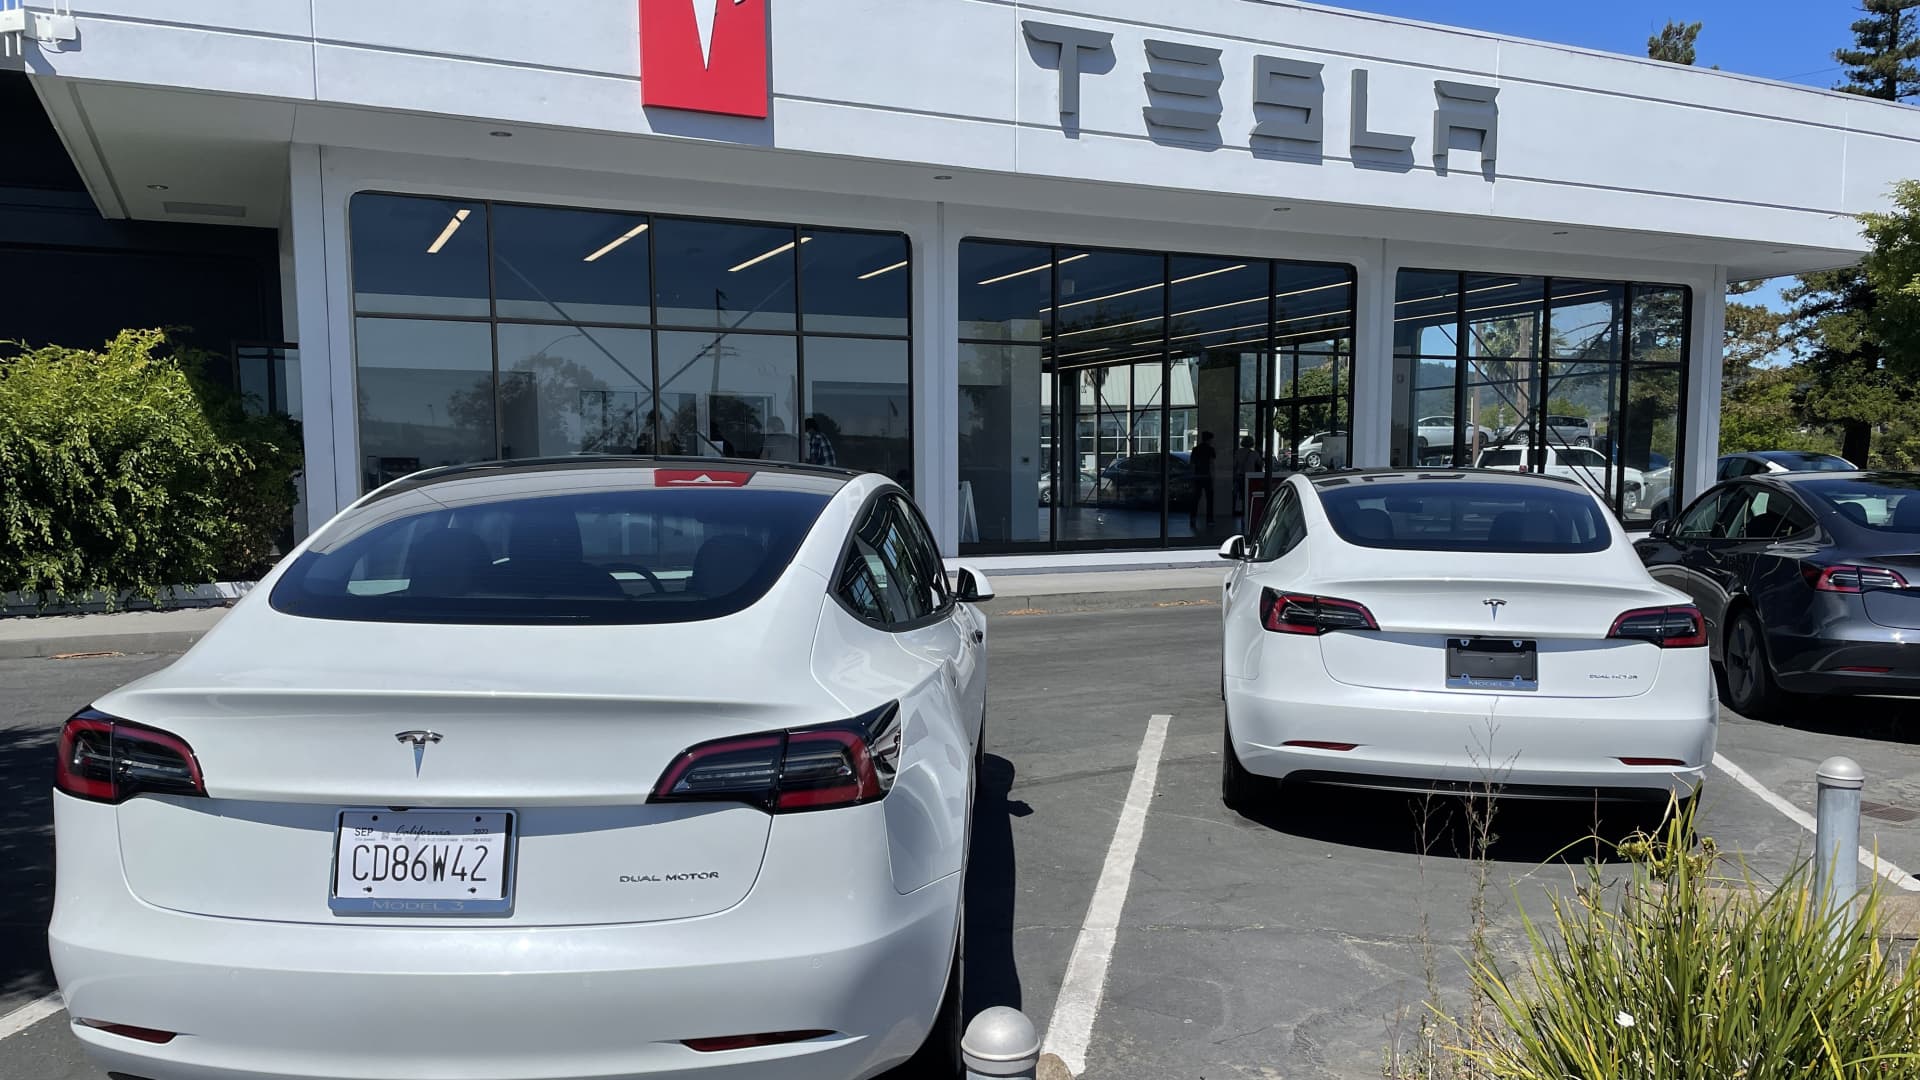 California DMV says Tesla FSD, Autopilot marketing misleading